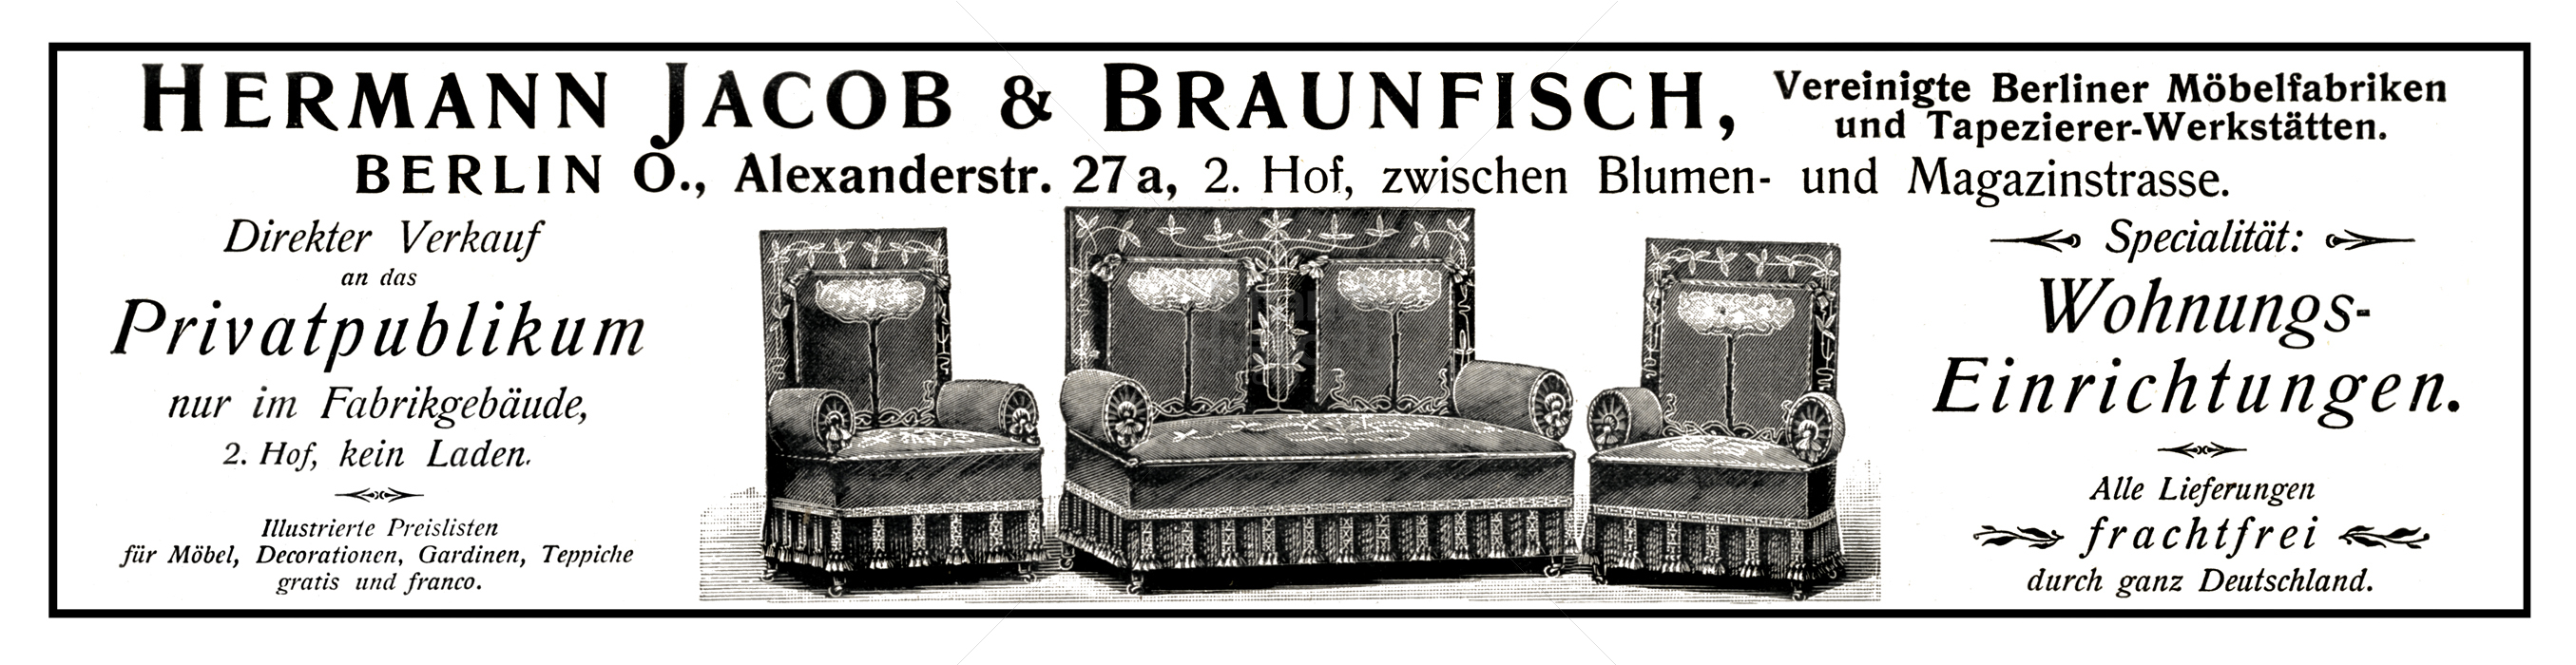 Hermann Jacob & Braunfisch